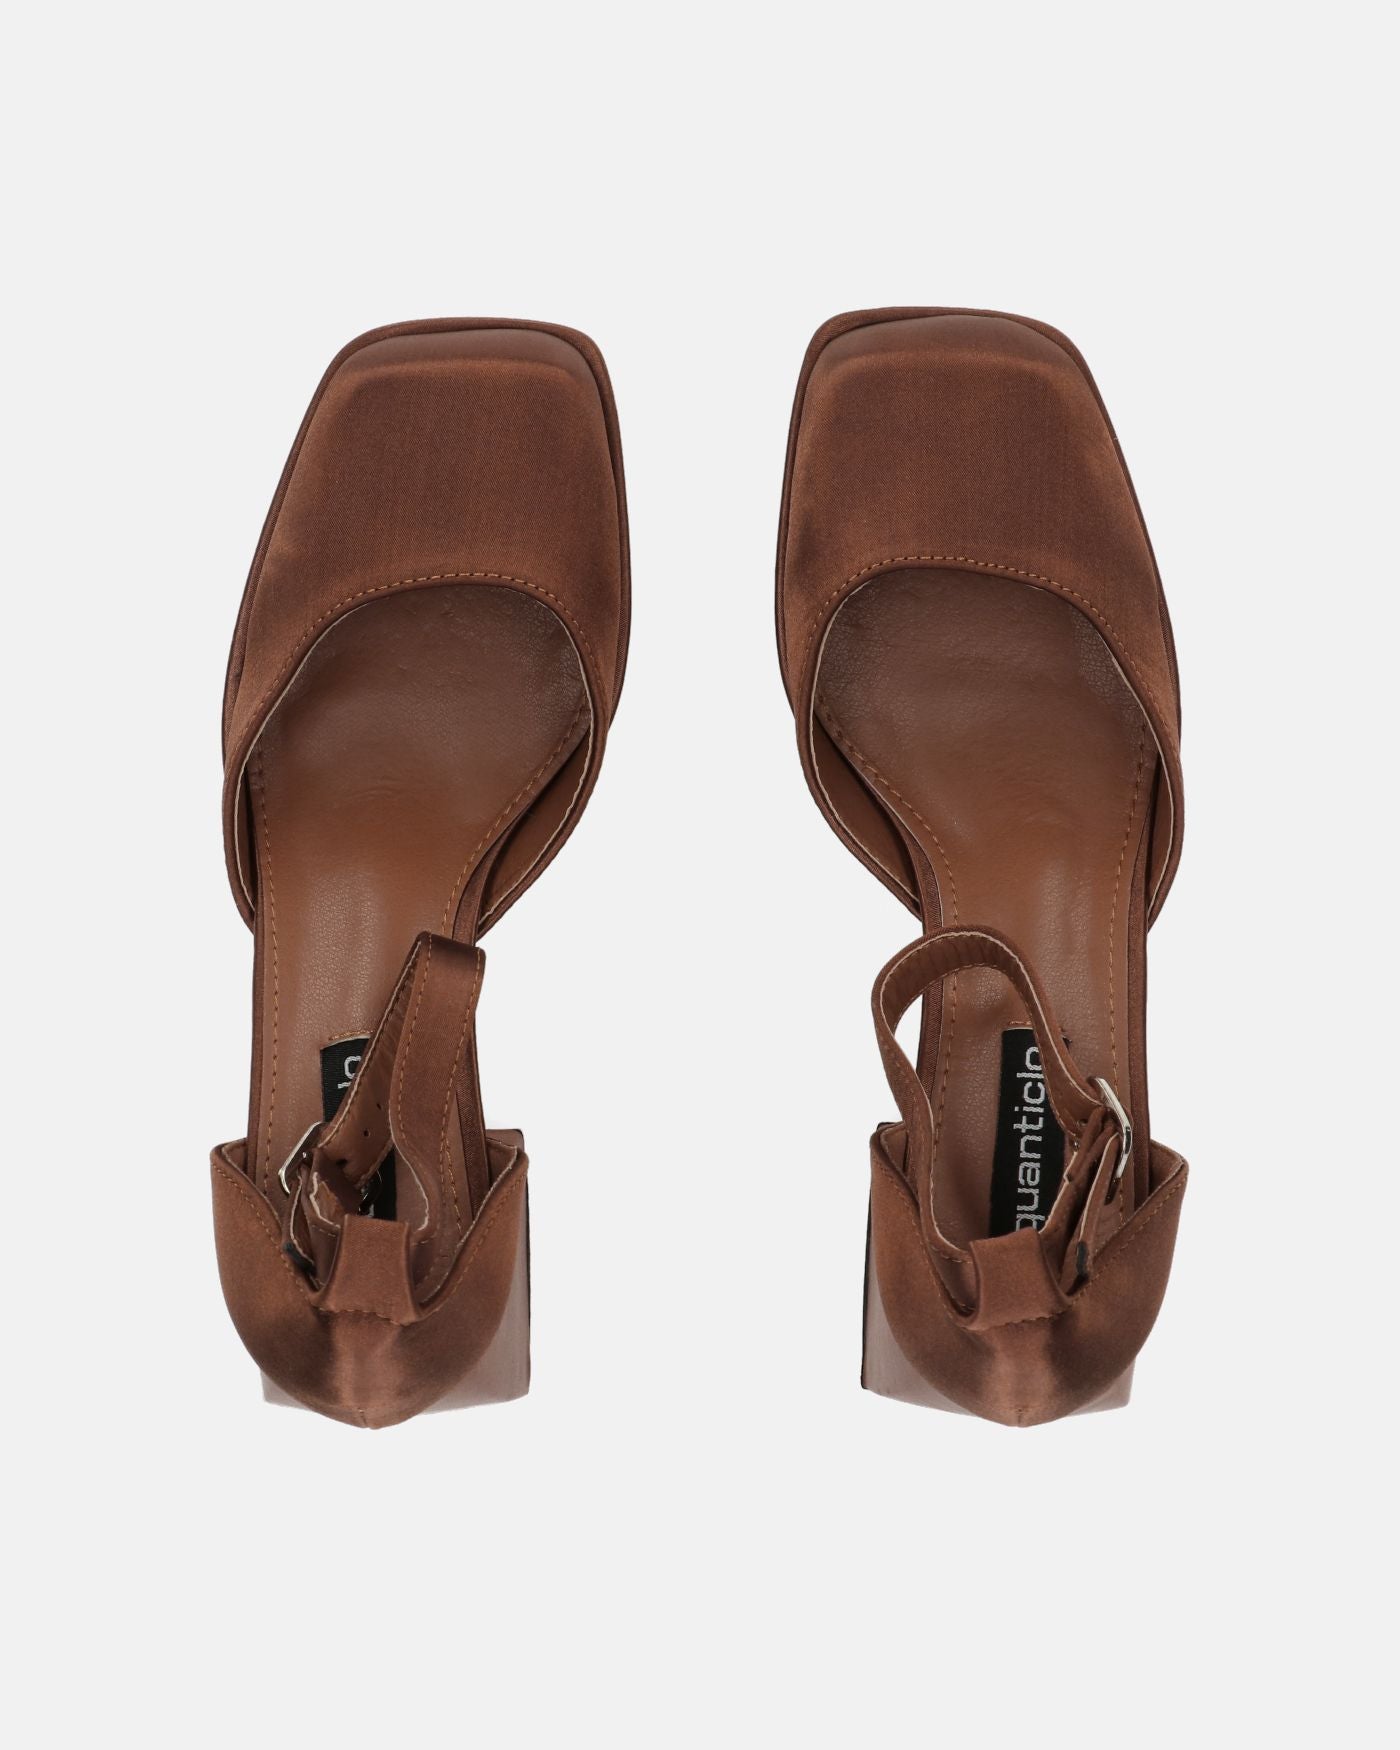 VIDA - square heel shoes in brown satin